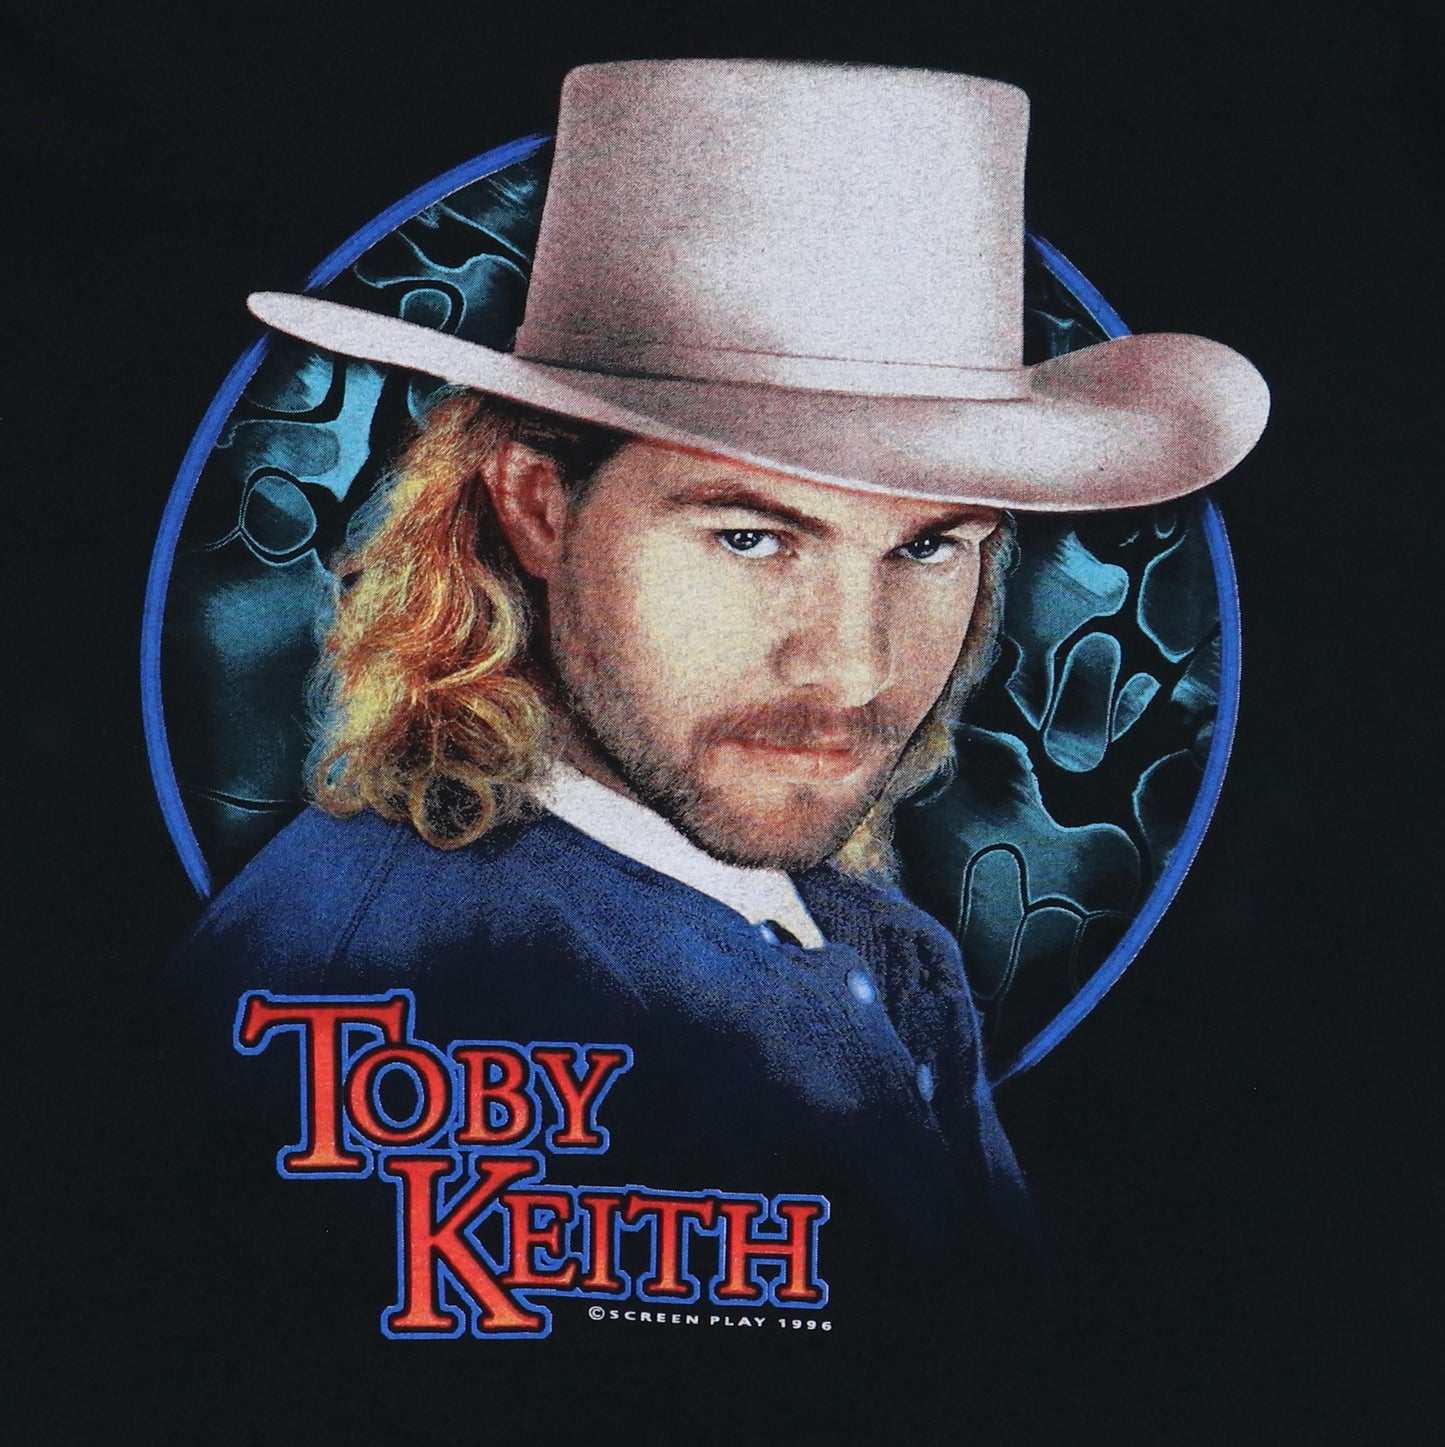 1996 Toby Keith Blue Moon Shine Shirt